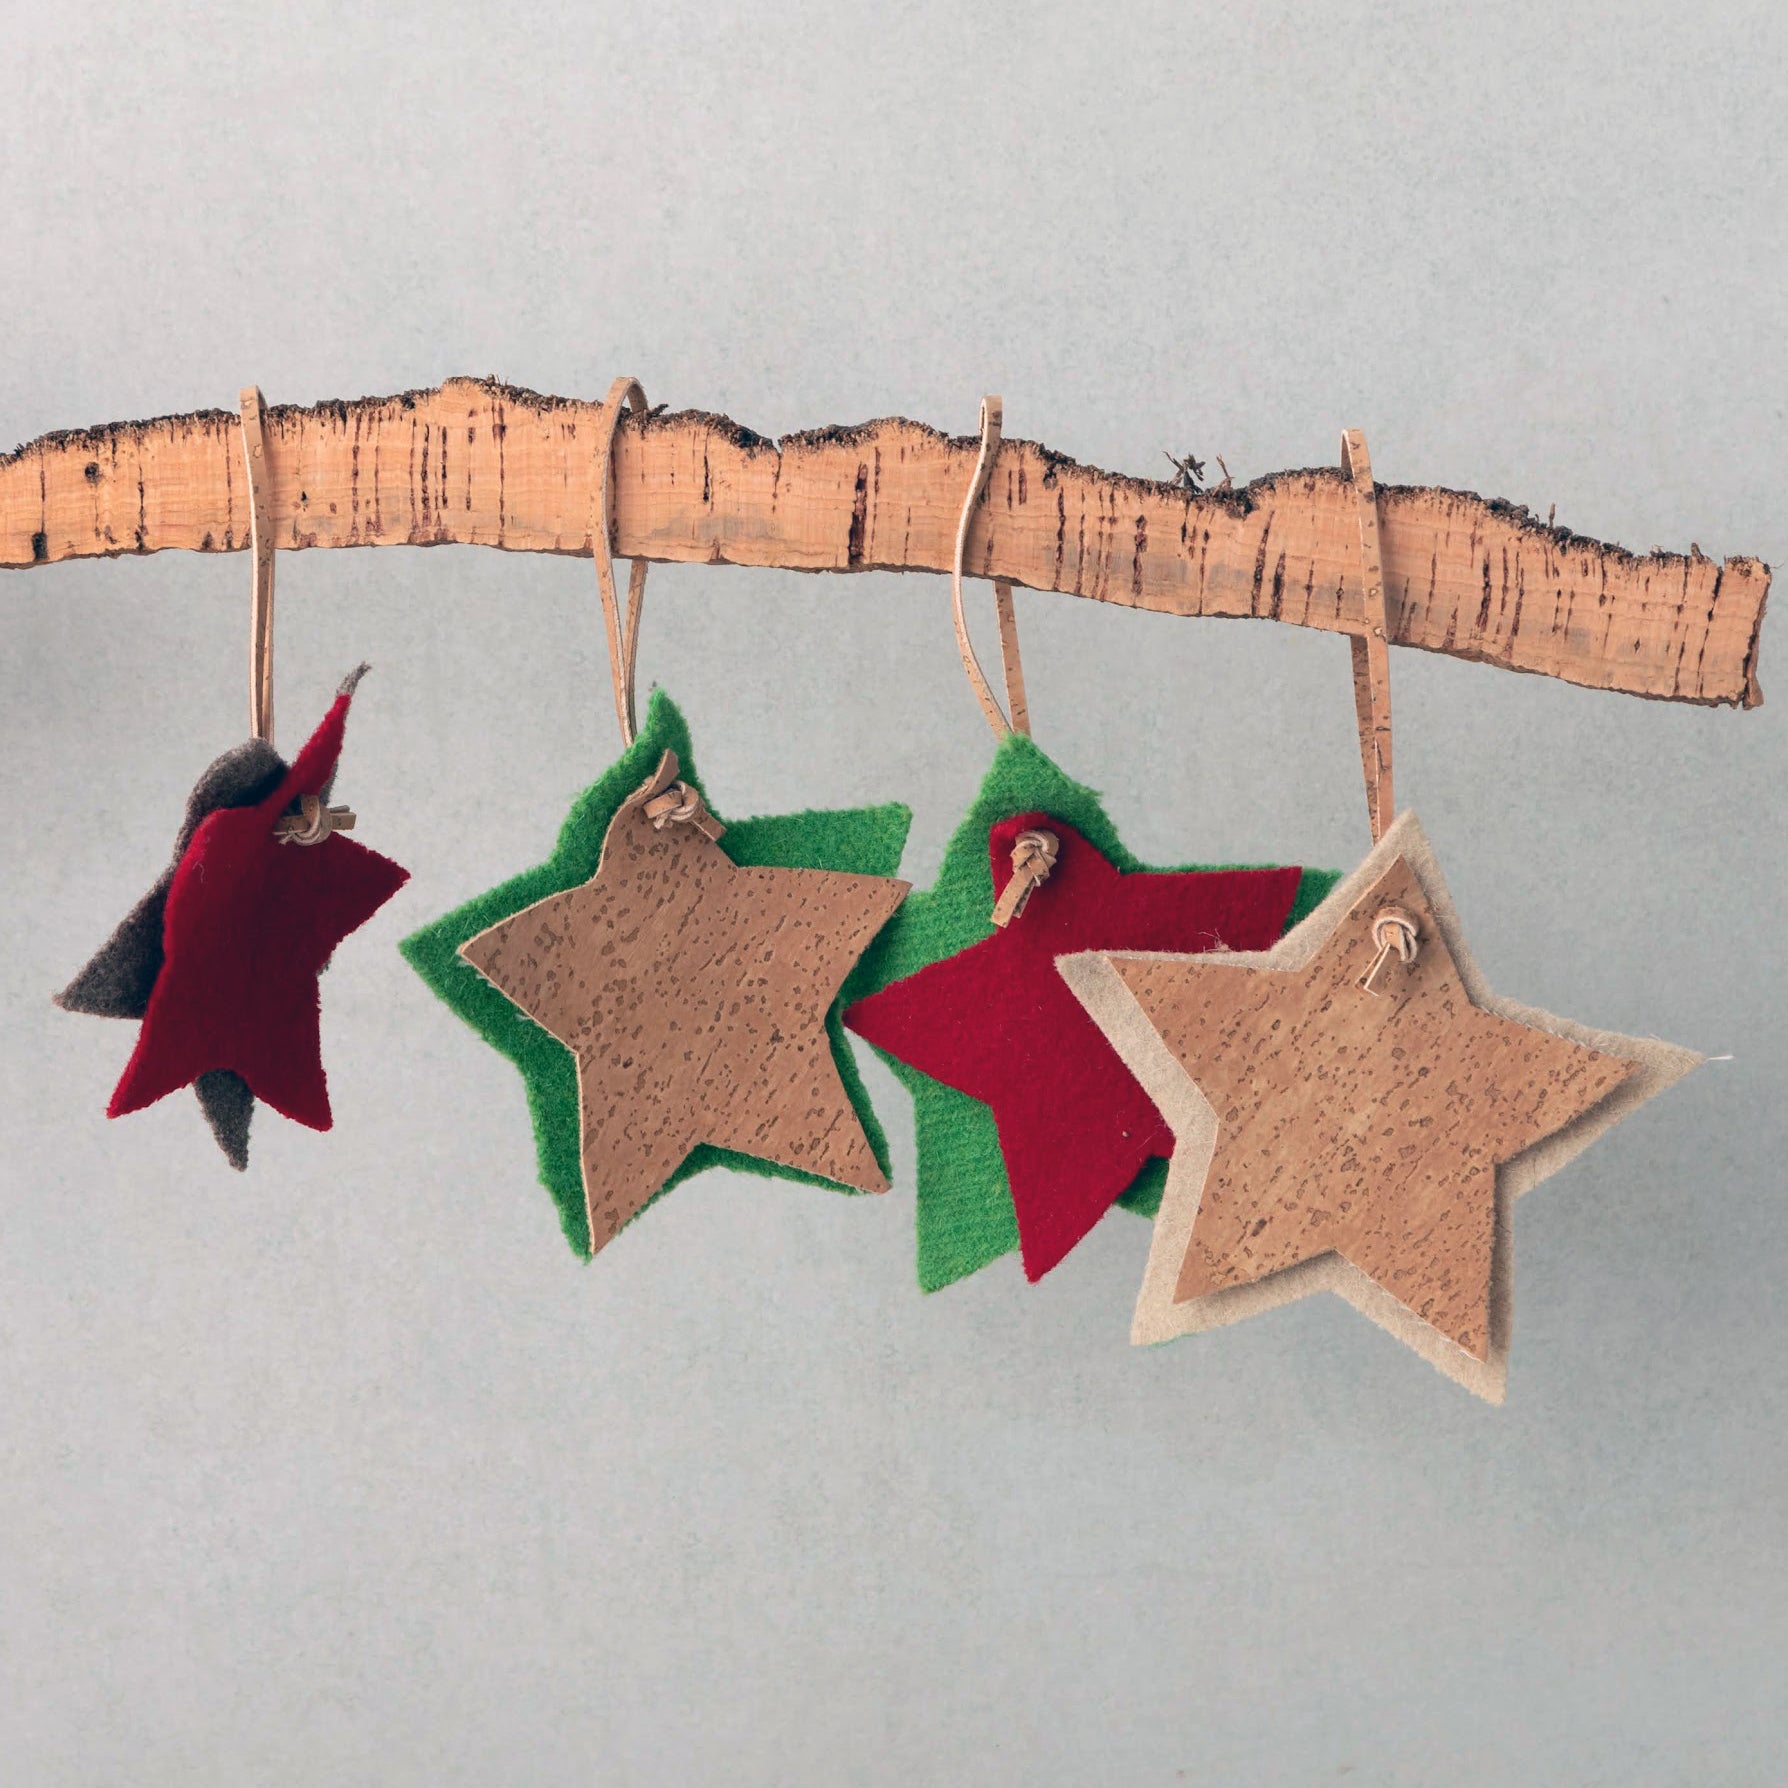 homemade holiday season stars made from eco-friendly materials